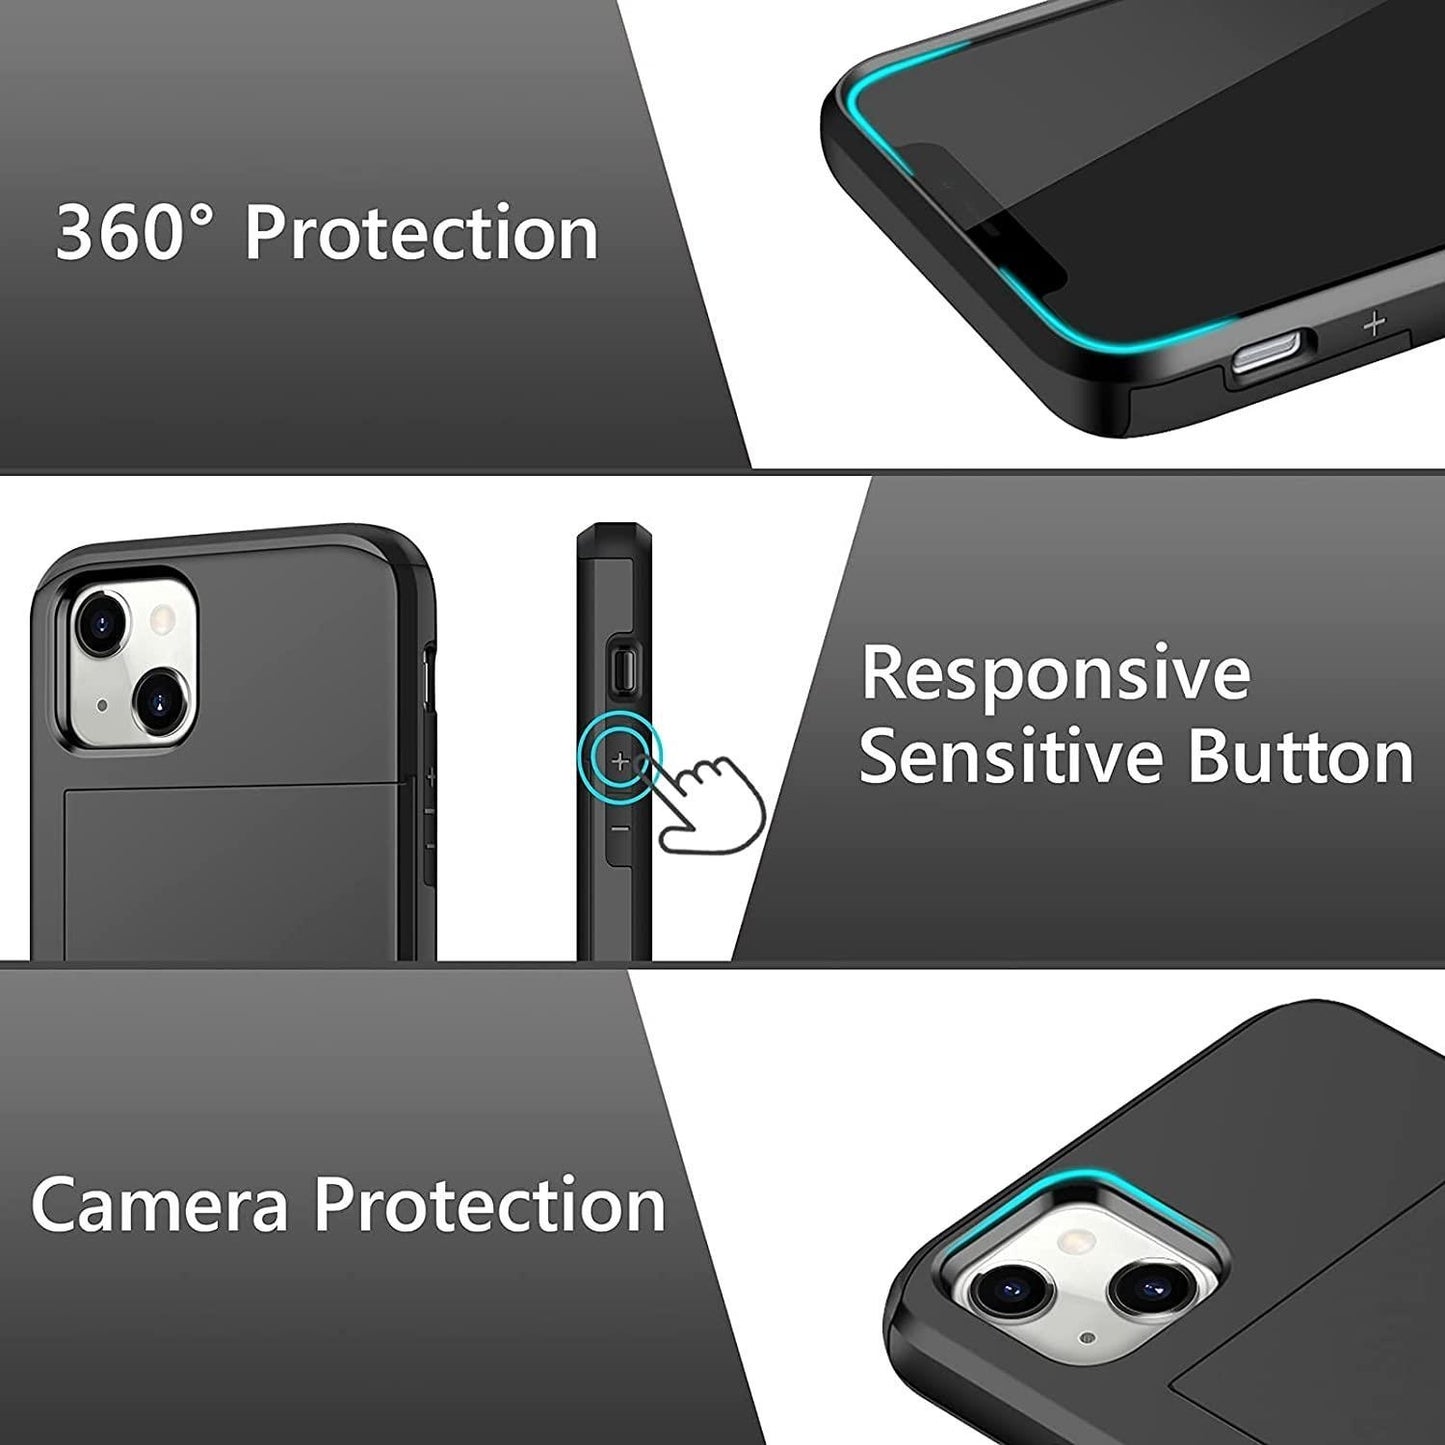 IPhone Wallet Case Full Protect Slide Card Holder